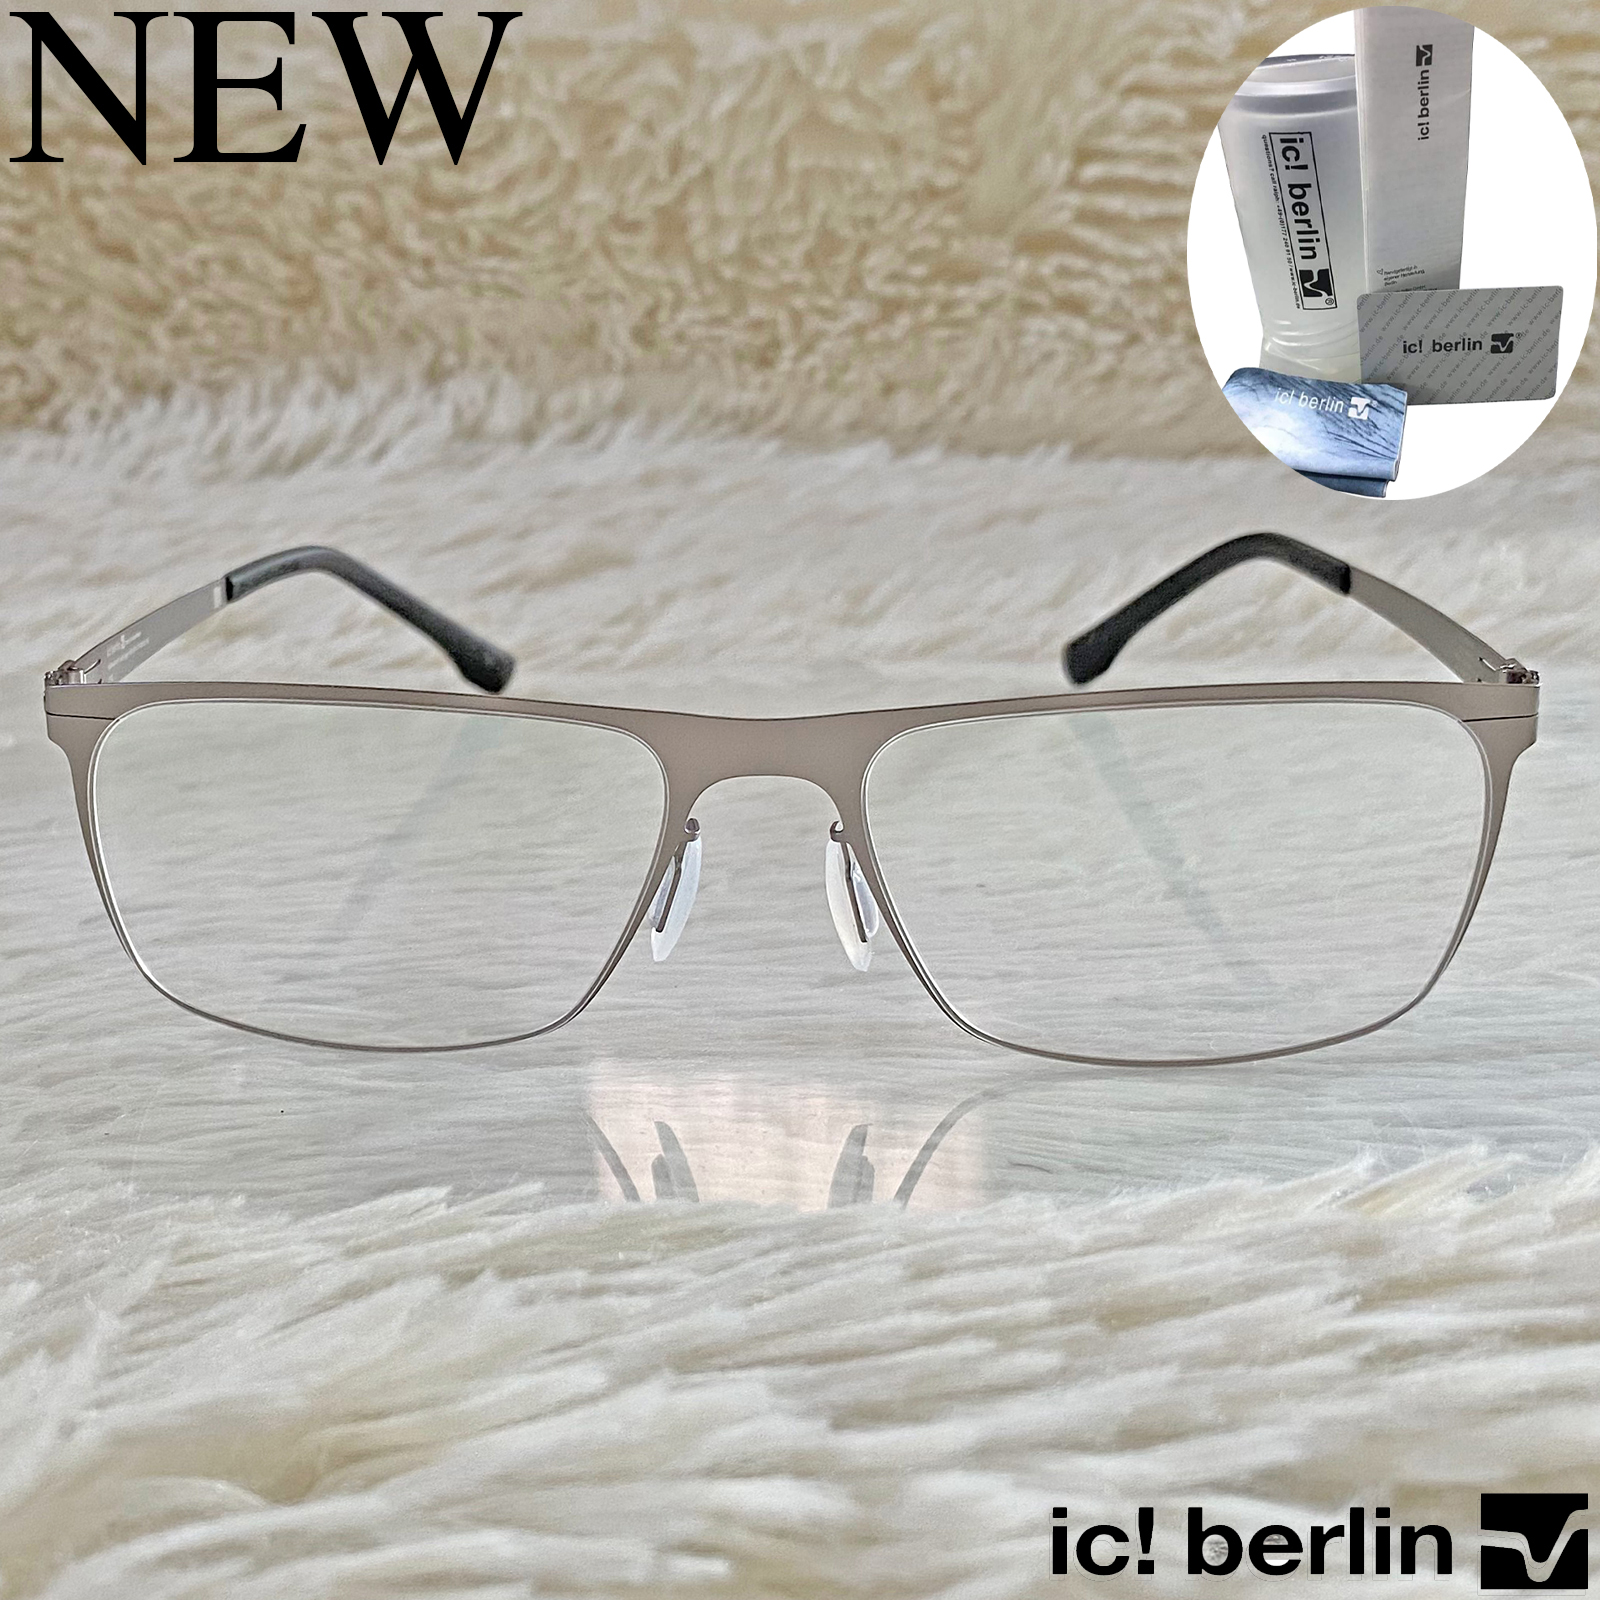 ic berlin กรอบแว่นตา สำหรับตัดเลนส์ แว่นตาชาย หญิง Fashion รุ่น 135 Seckorso 66 กรอบเต็ม ทรงเหลี่ยม ขาไม่ใช้น็อต ถอดได้ วัสดุ Stainless Steel น้ำหนักเบา